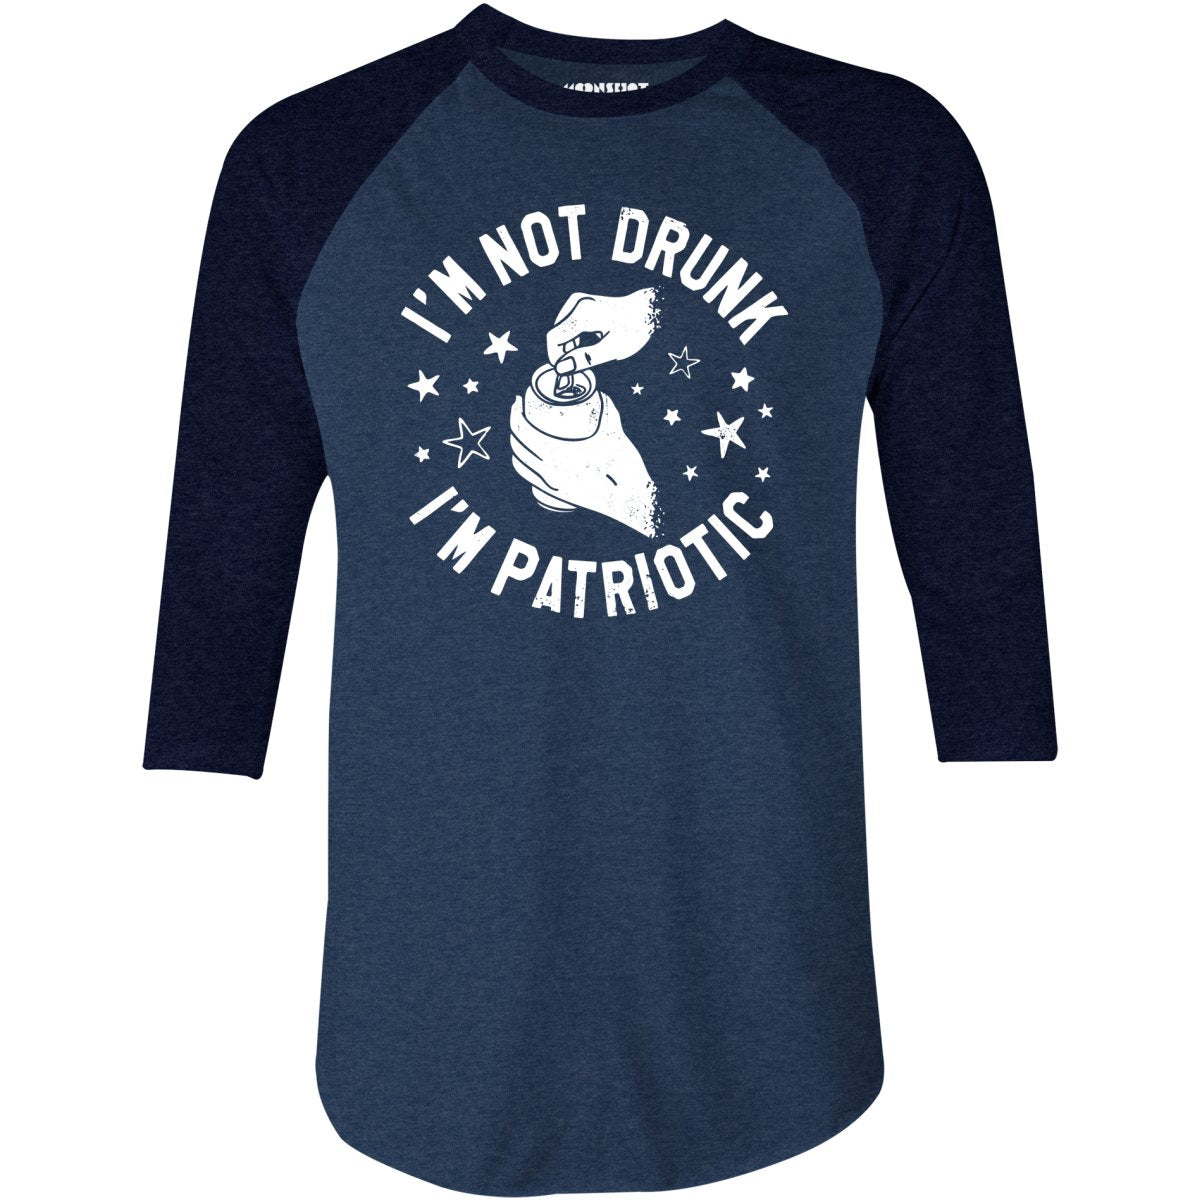 I'm Not Drunk I'm Patriotic - 3/4 Sleeve Raglan T-Shirt